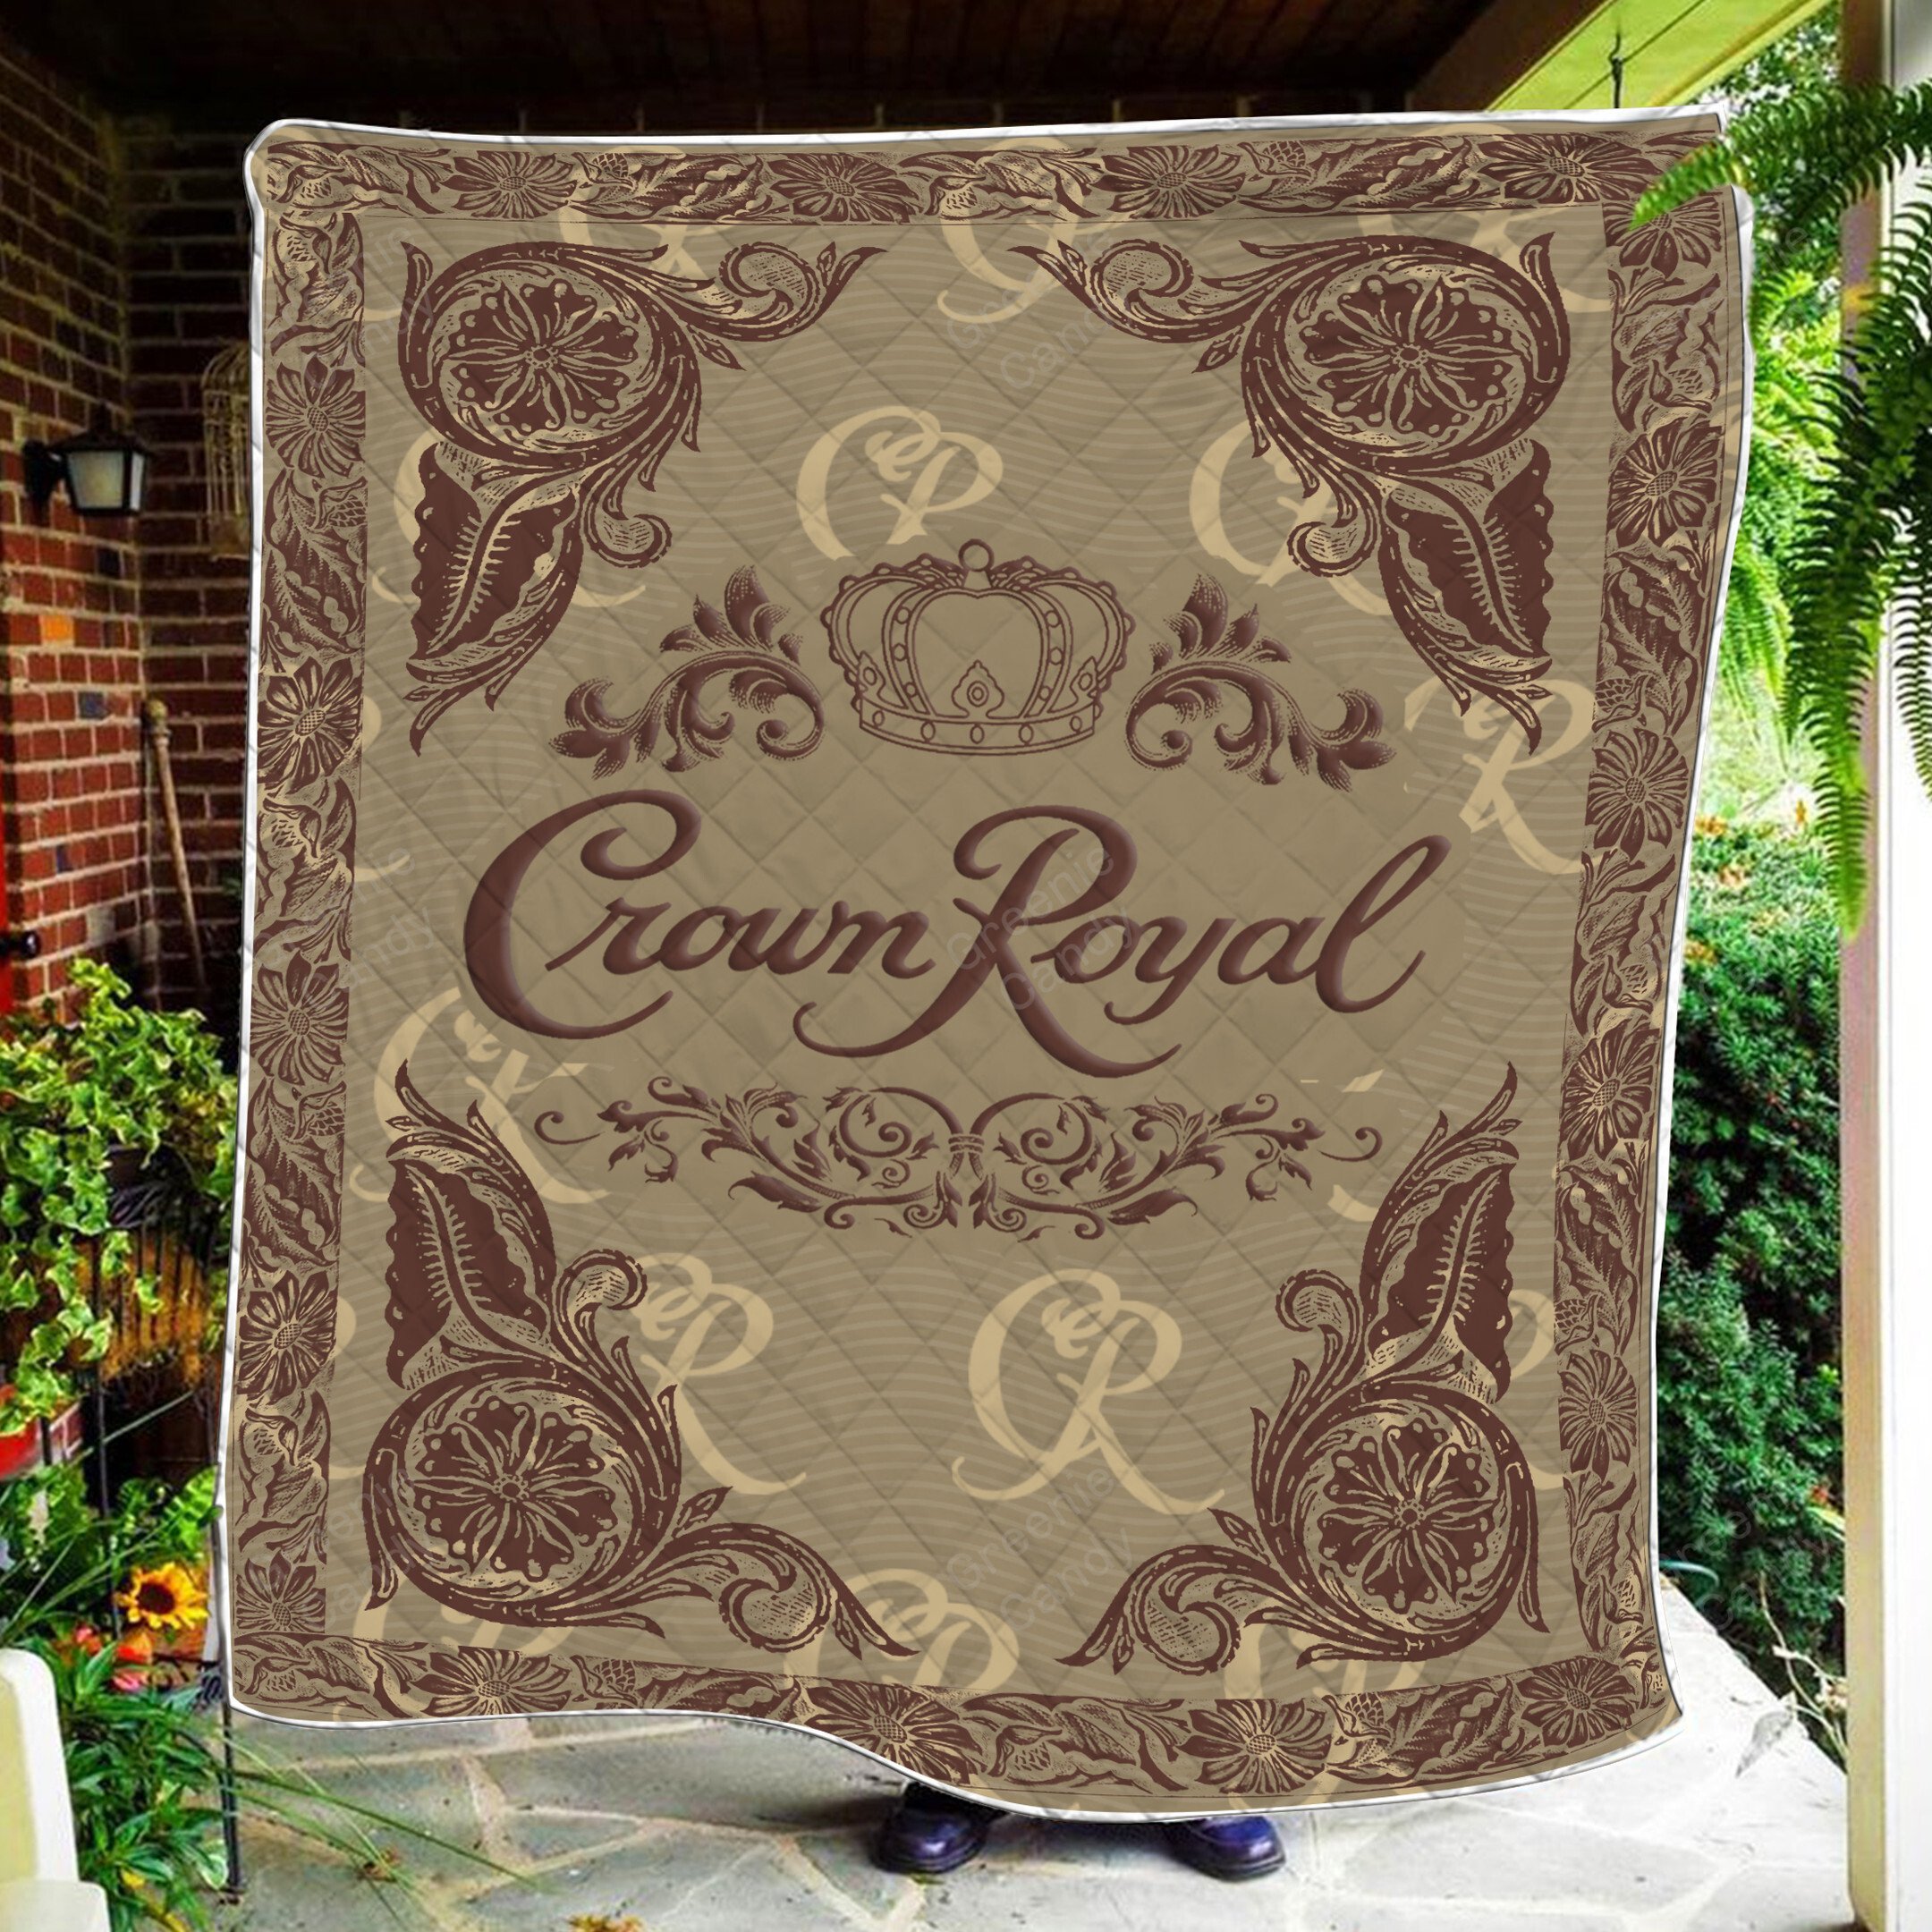 Crown Royal Vanilla Whisky blanket quilt